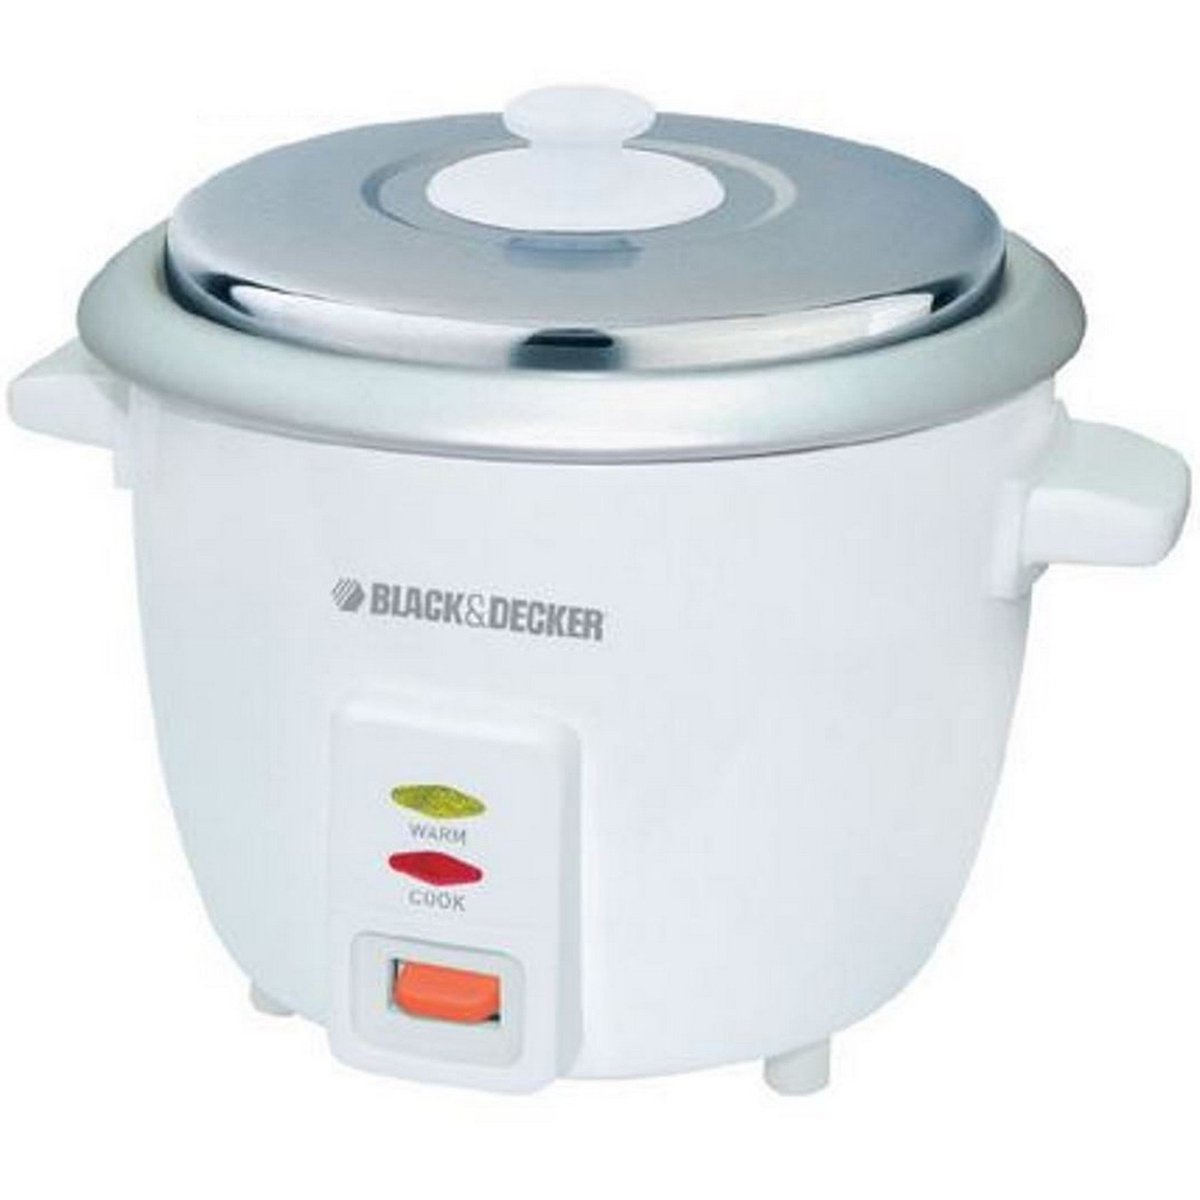 Black&Decker Rice Cooker RC-600 0.6Ltr